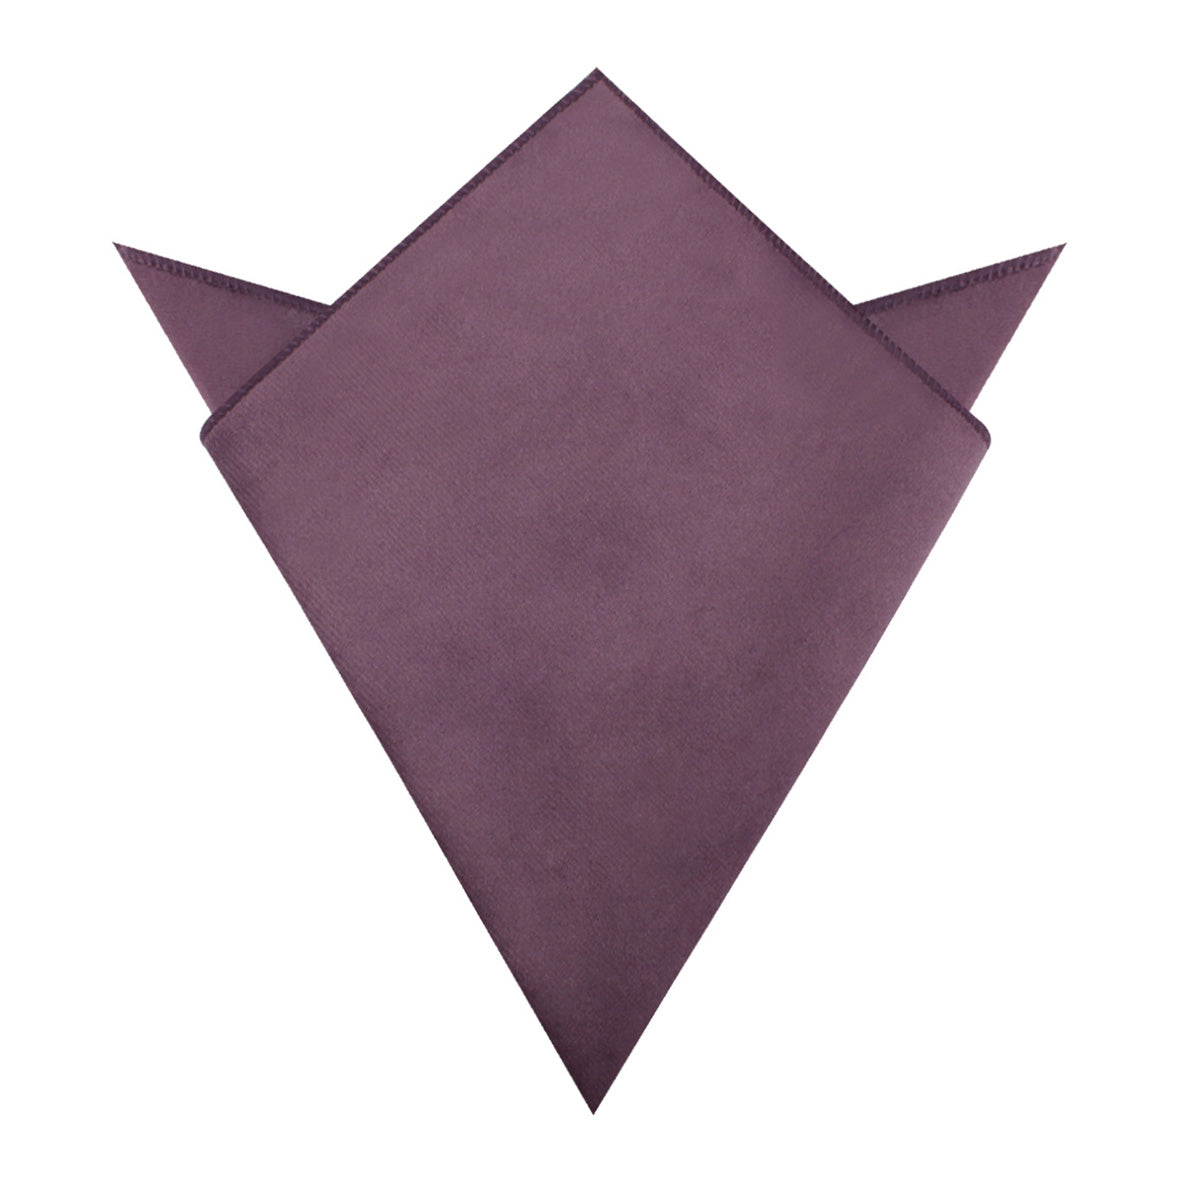 Dusty Lilac Purple Velvet Pocket Square